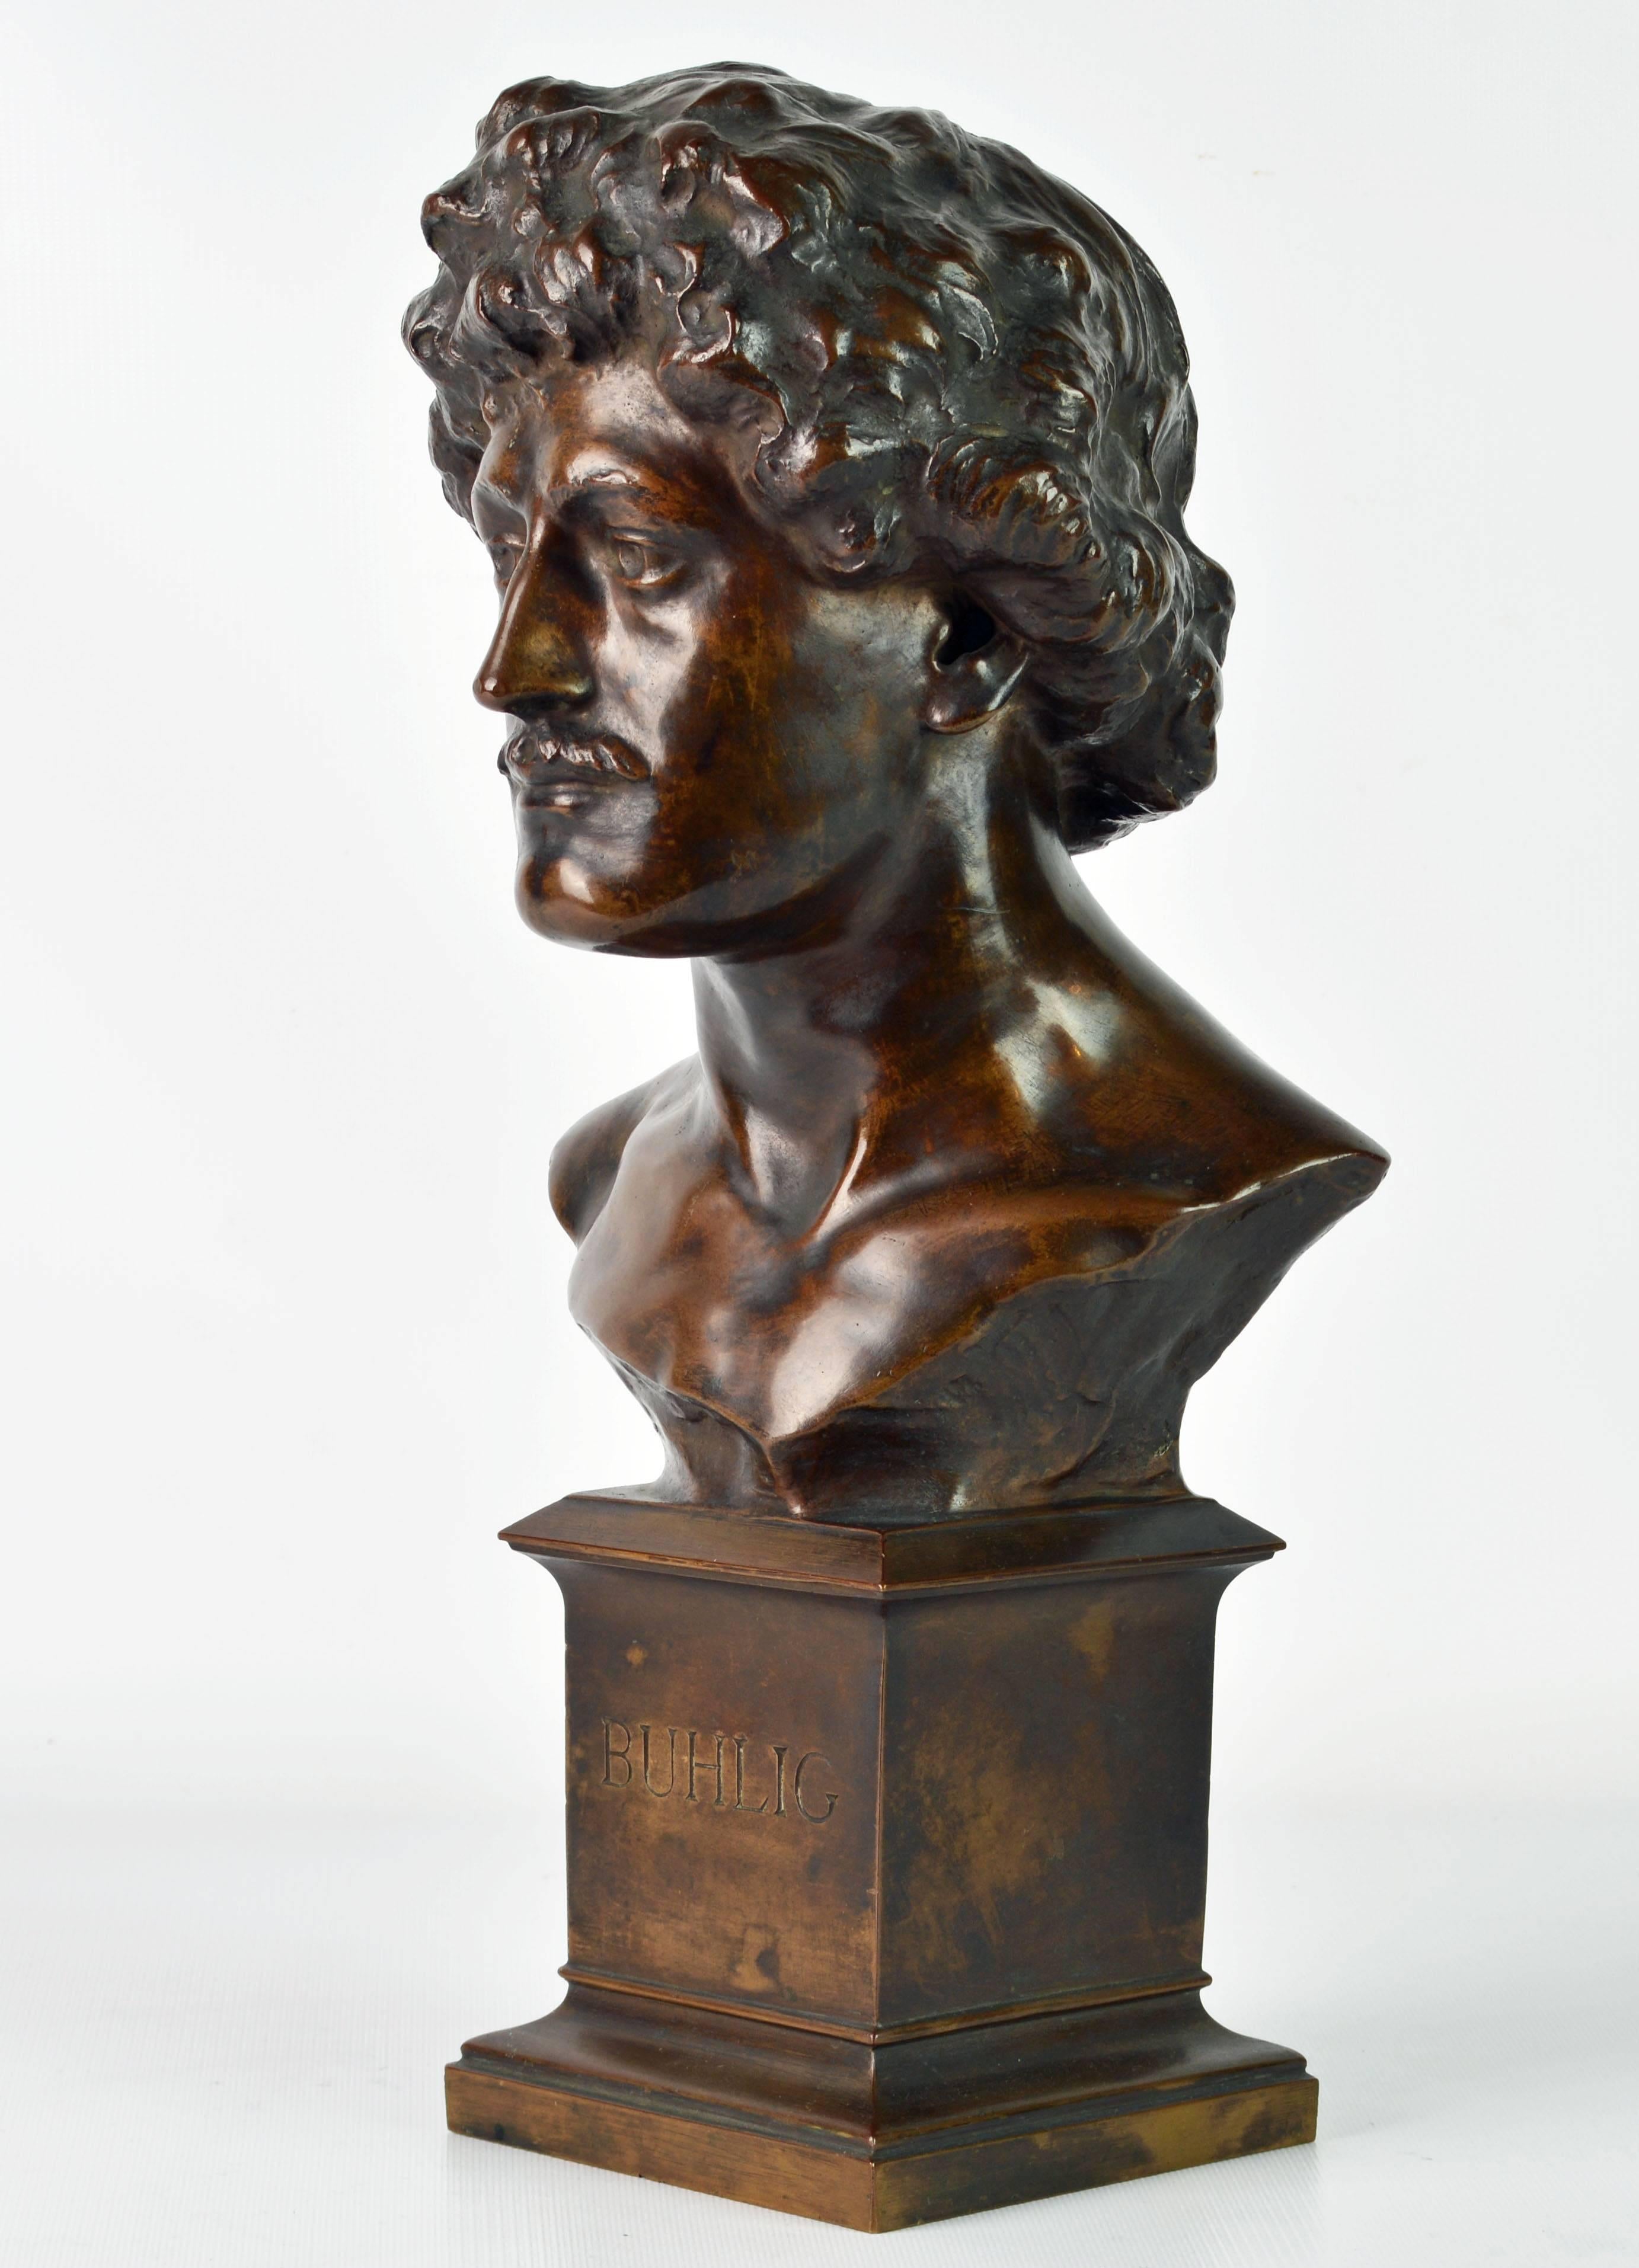 Edwardian Bronzebust of American Pianist Richard Buhlig by British Sculptor Hibbert Binney